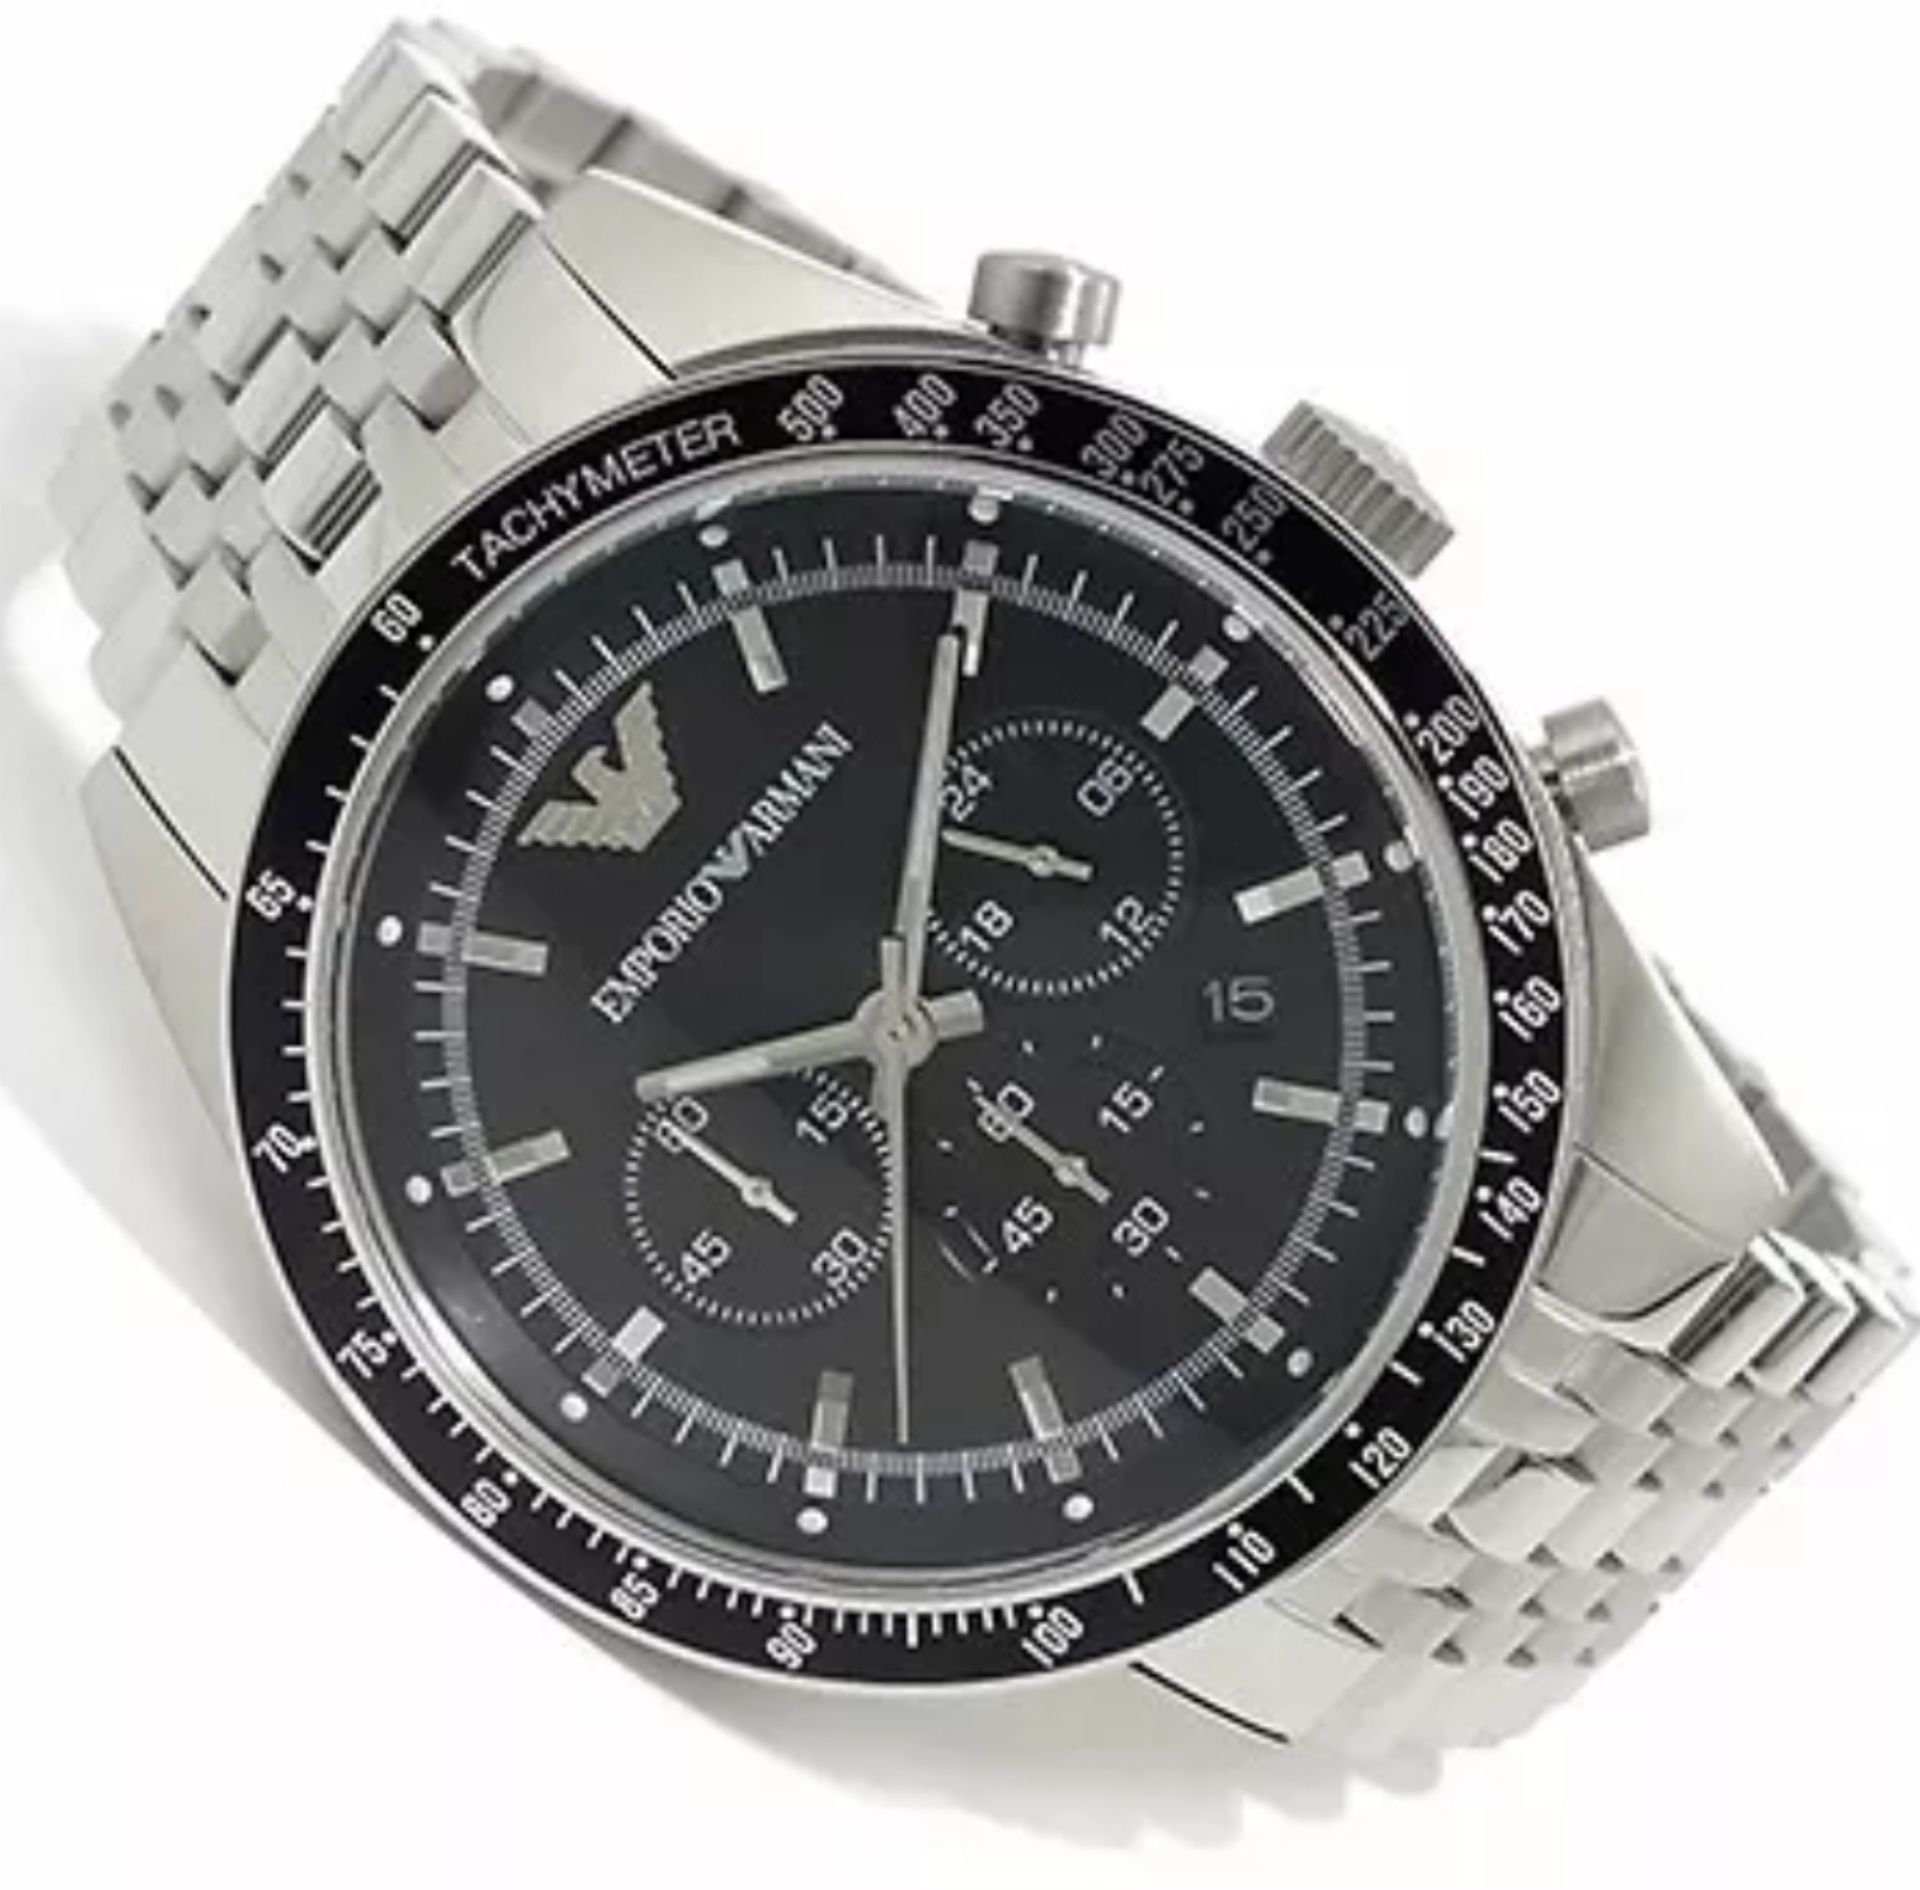 Emporio Armani AR5988 Men's Tazio Black Dial Silver Bracelet Chronograph Watch - Image 5 of 10